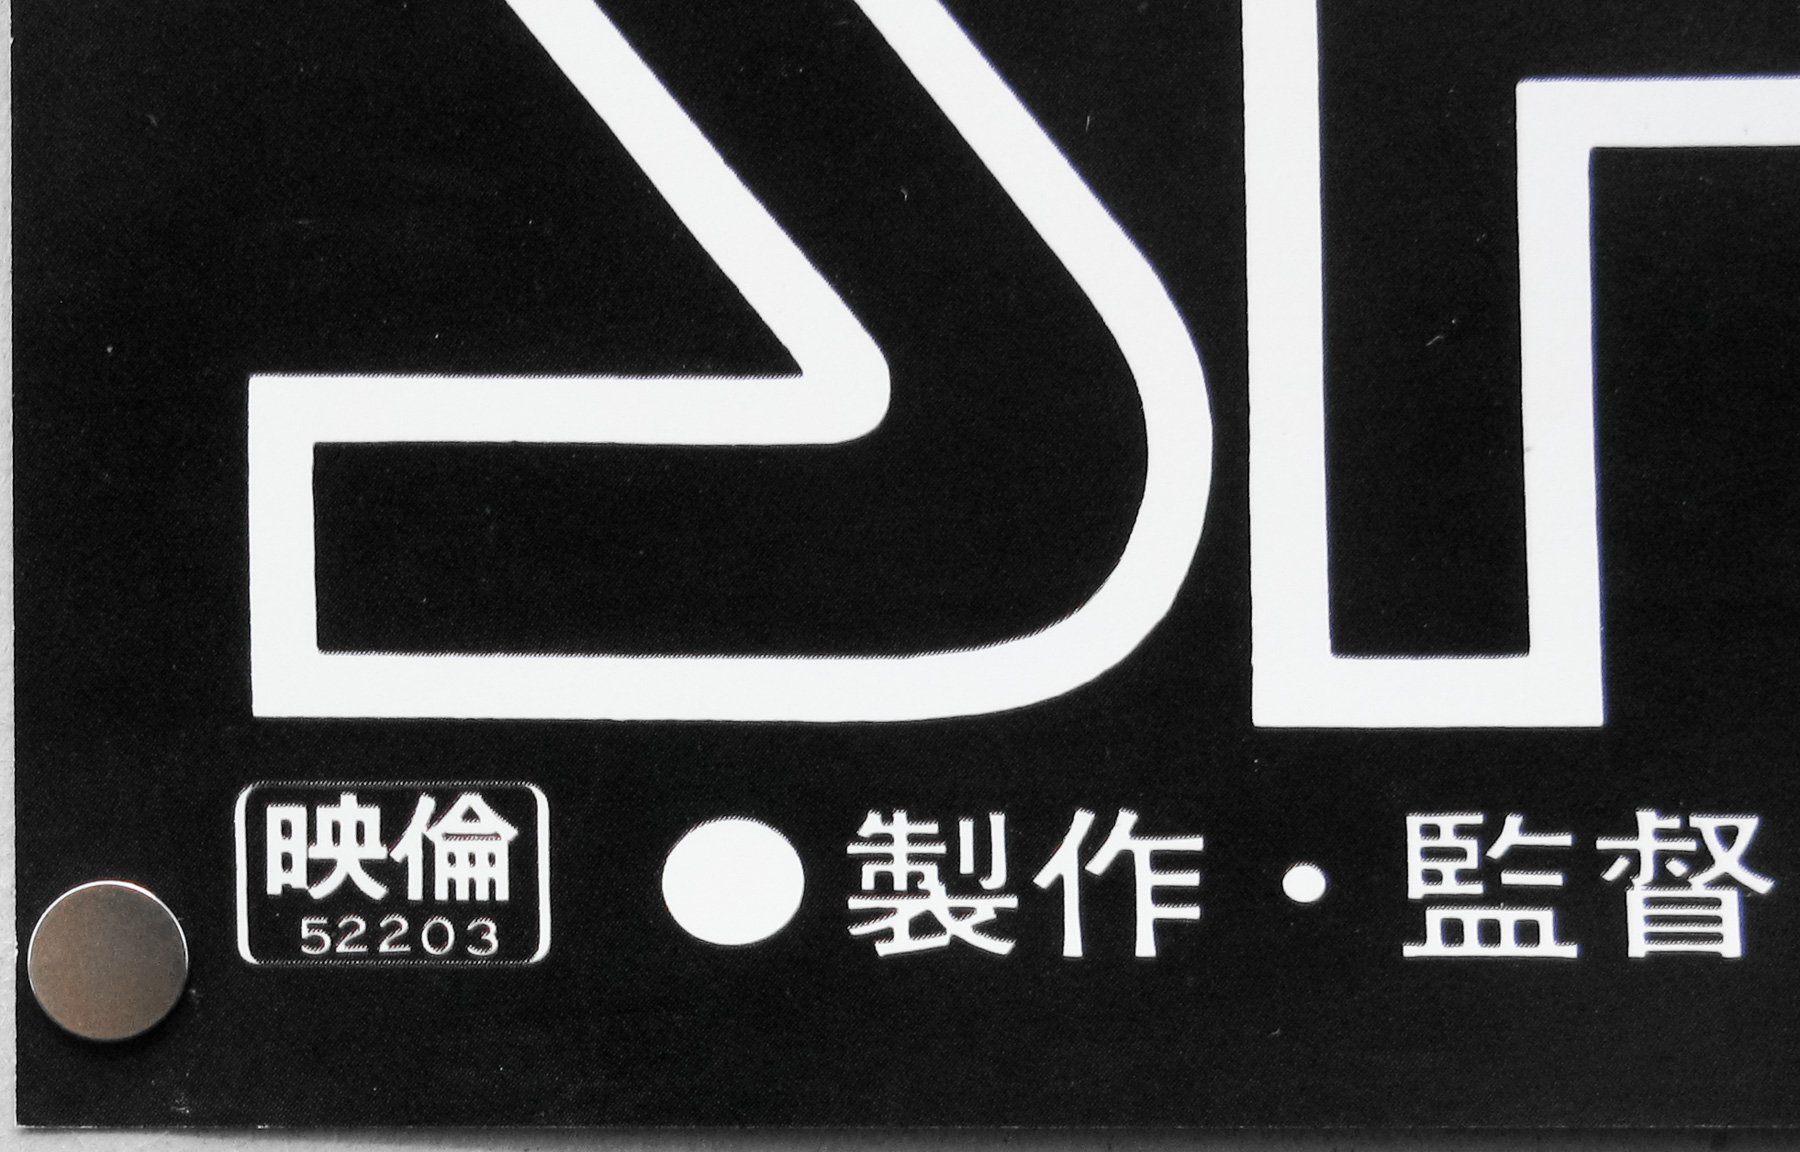 FLESH GORDON aka SPACE WARS In Japan MOVIE POSTER 11x17 With Plastic Holder